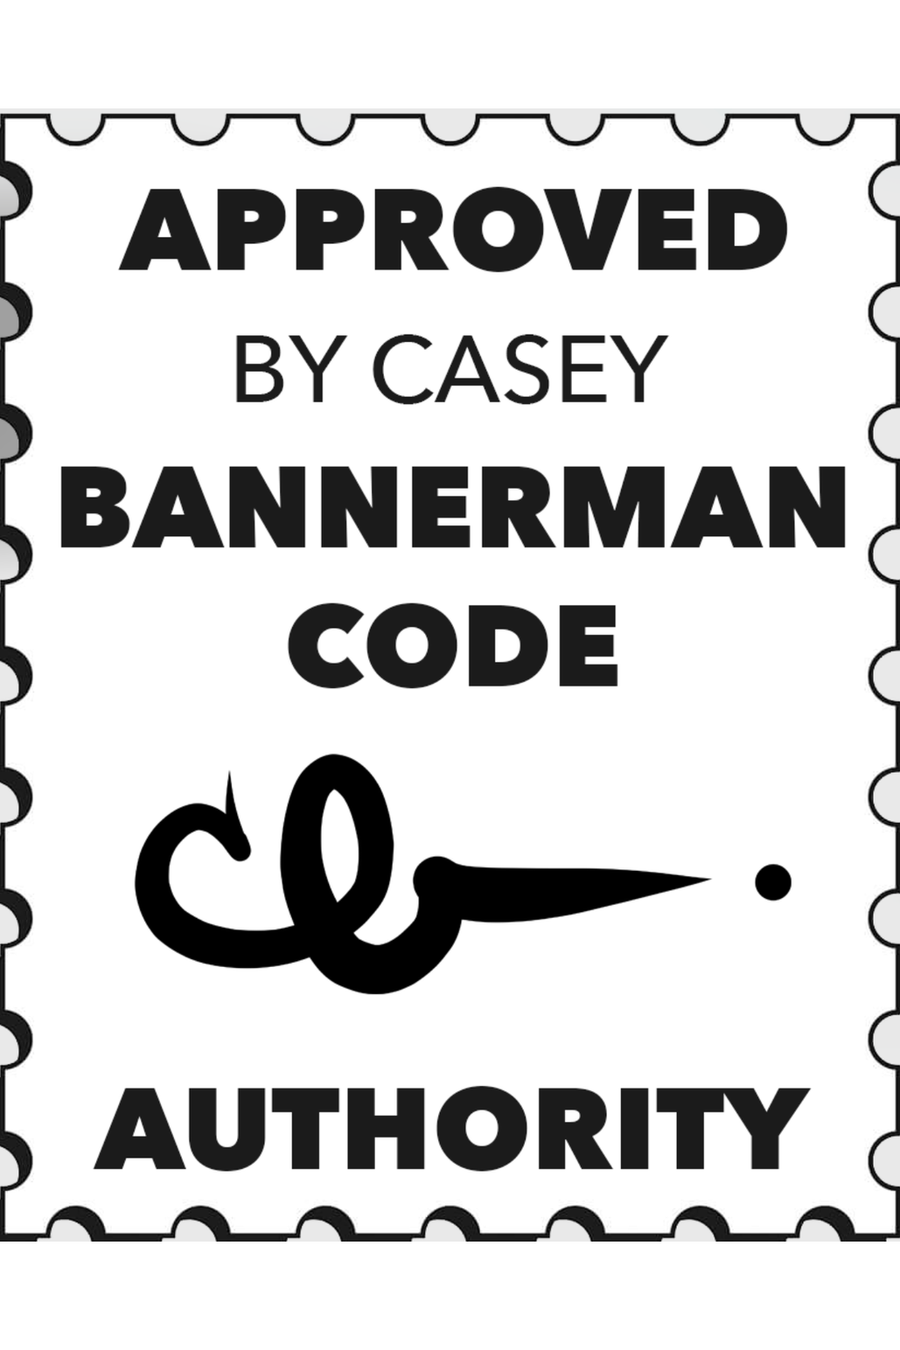 Casey Bannerman Gift Certificate